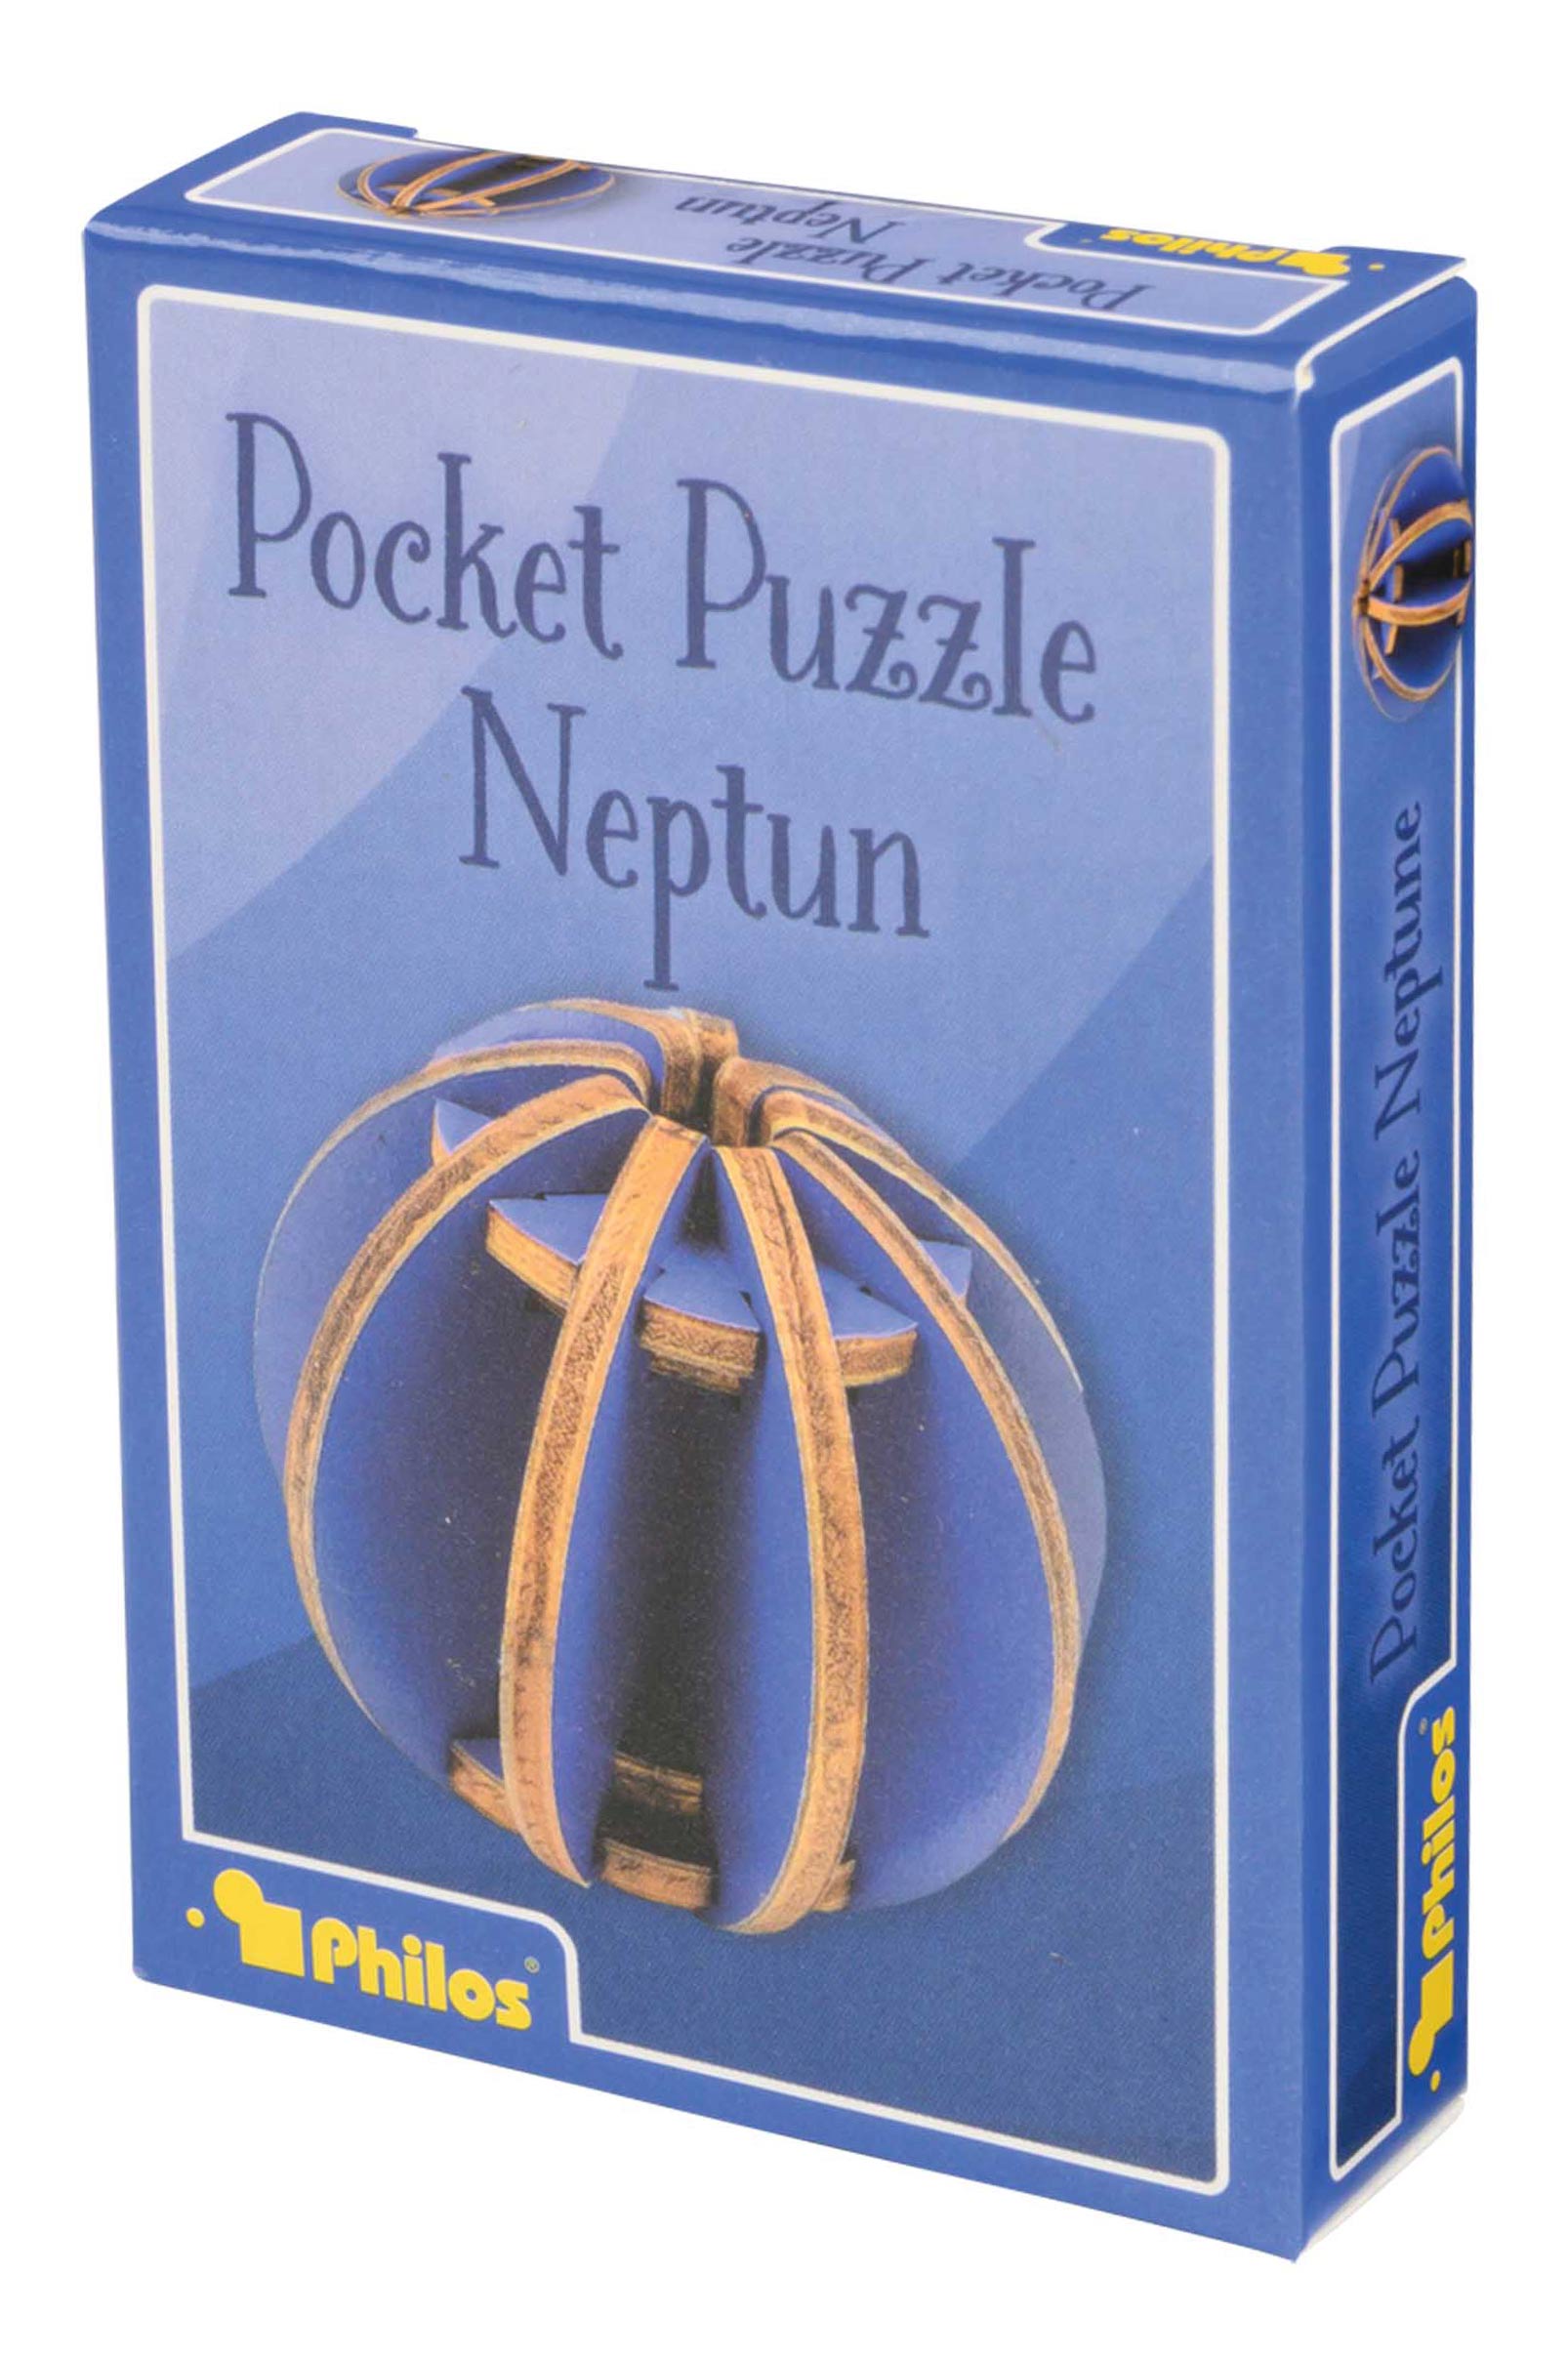 3D Pocket Puzzle, Neptun